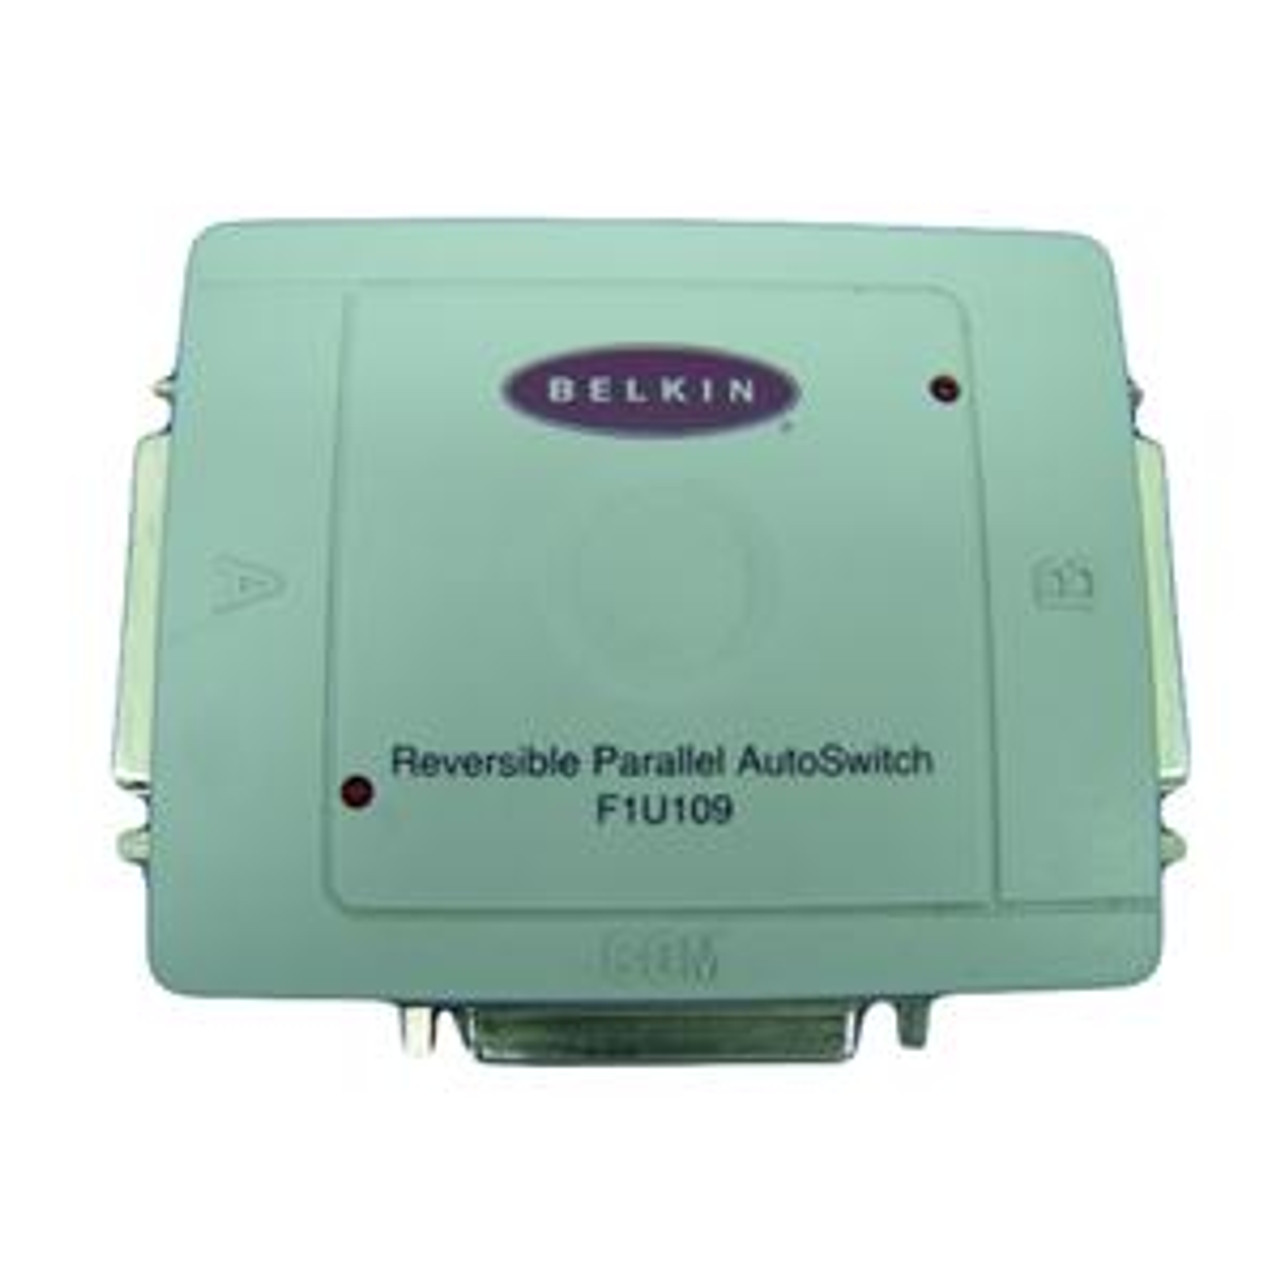 FIU109 Belkin Reversible Parallel Auto Switch (Refurbished)